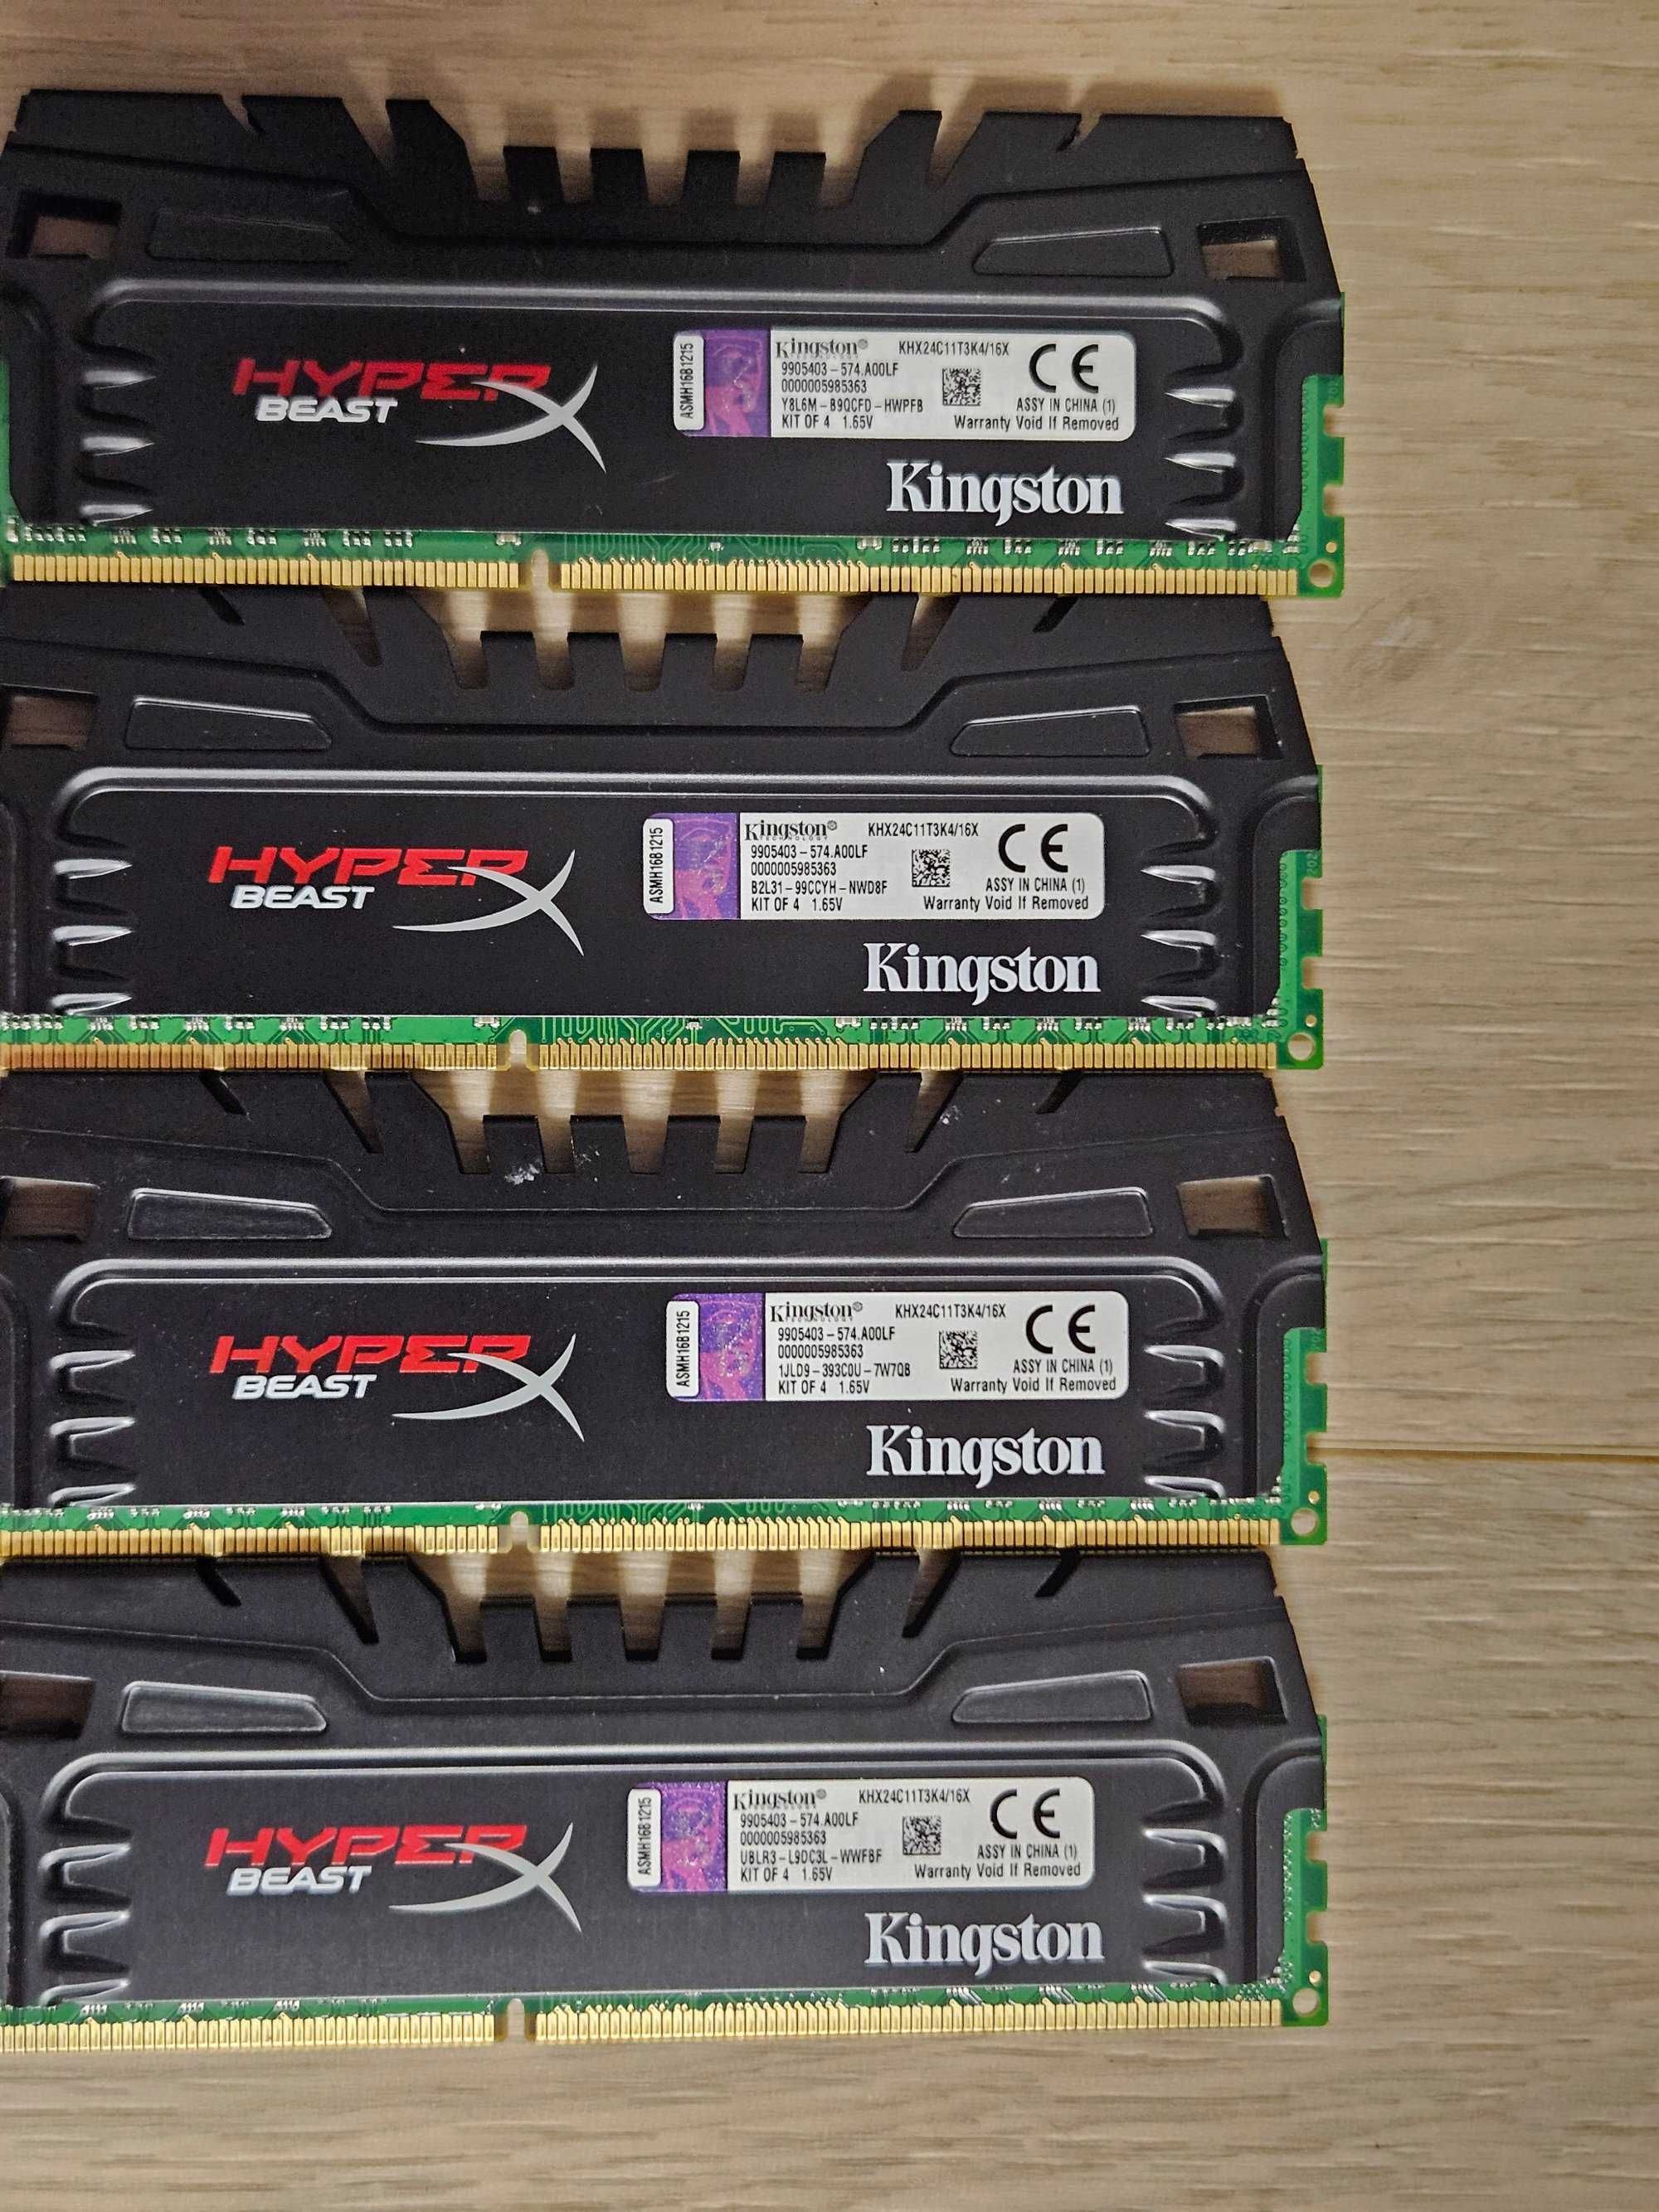 ТОП! пам'ять DDR3 16GB Kit (4x4) 2400MHz CL11 HyperX BEAST. Trade-in